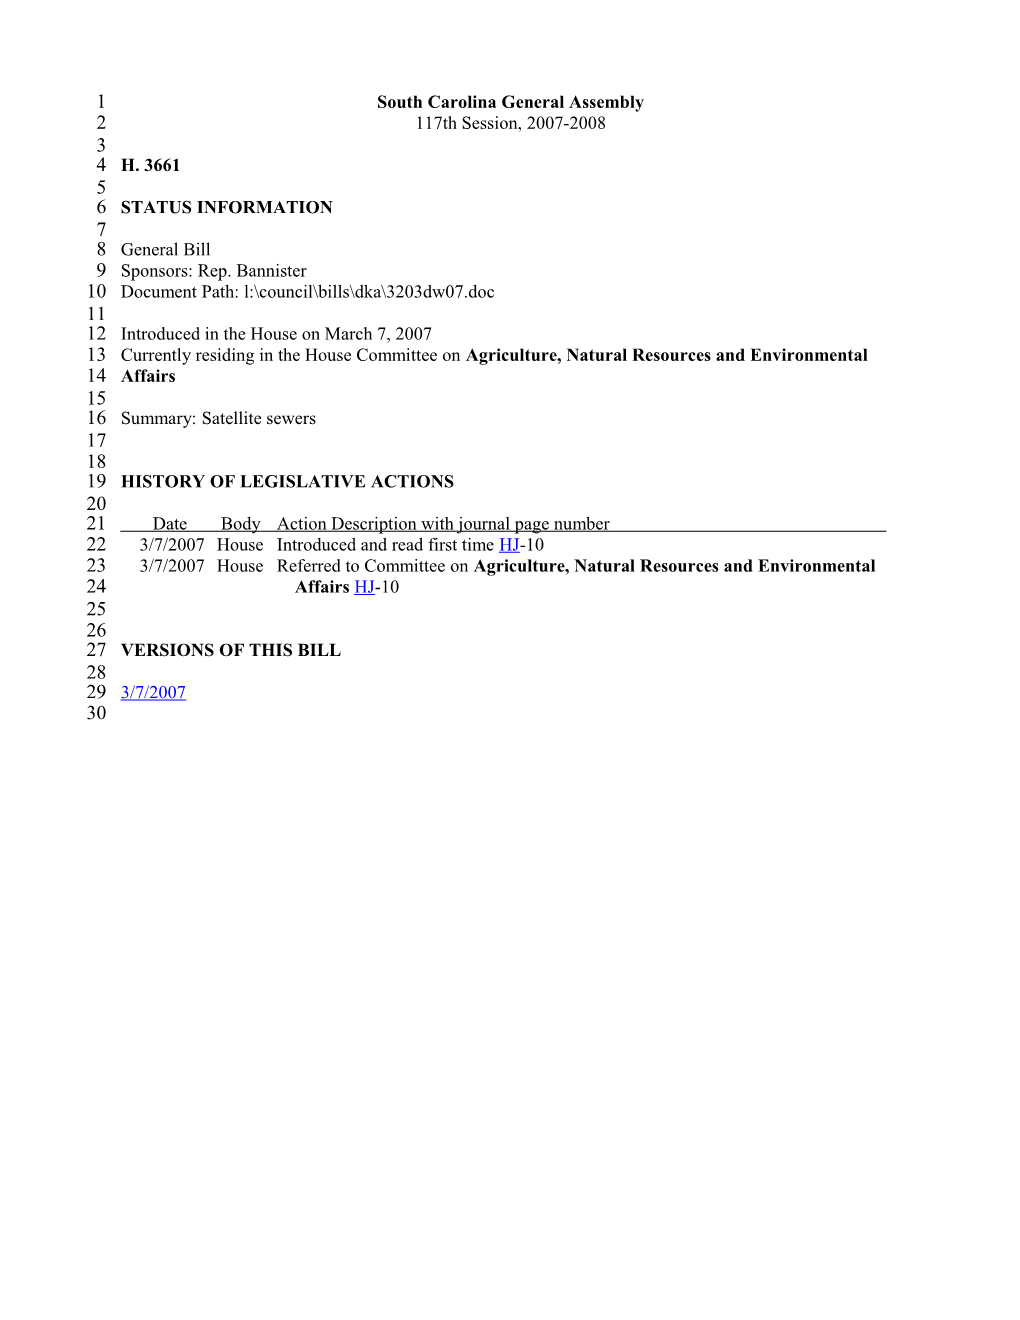 2007-2008 Bill 3661: Satellite Sewers - South Carolina Legislature Online